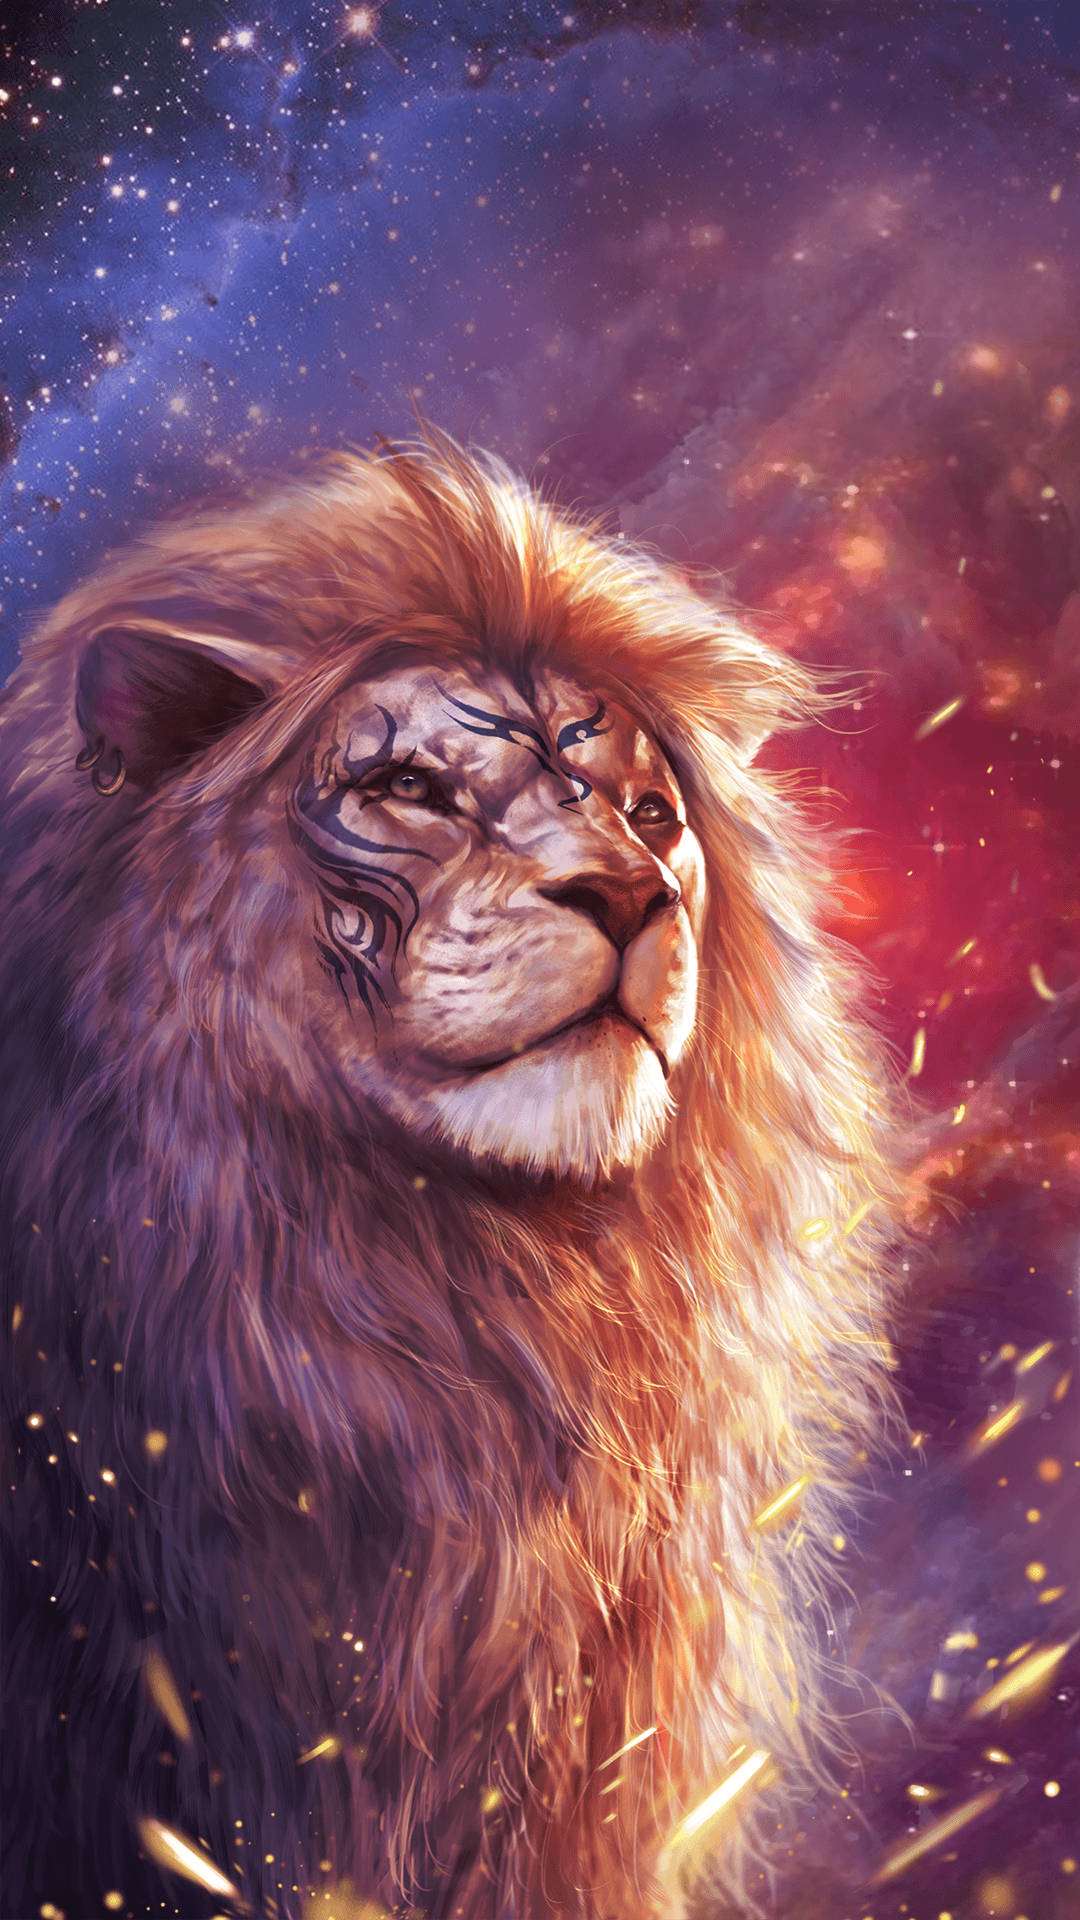 Galaxy Lion Realistic Art Wallpaper